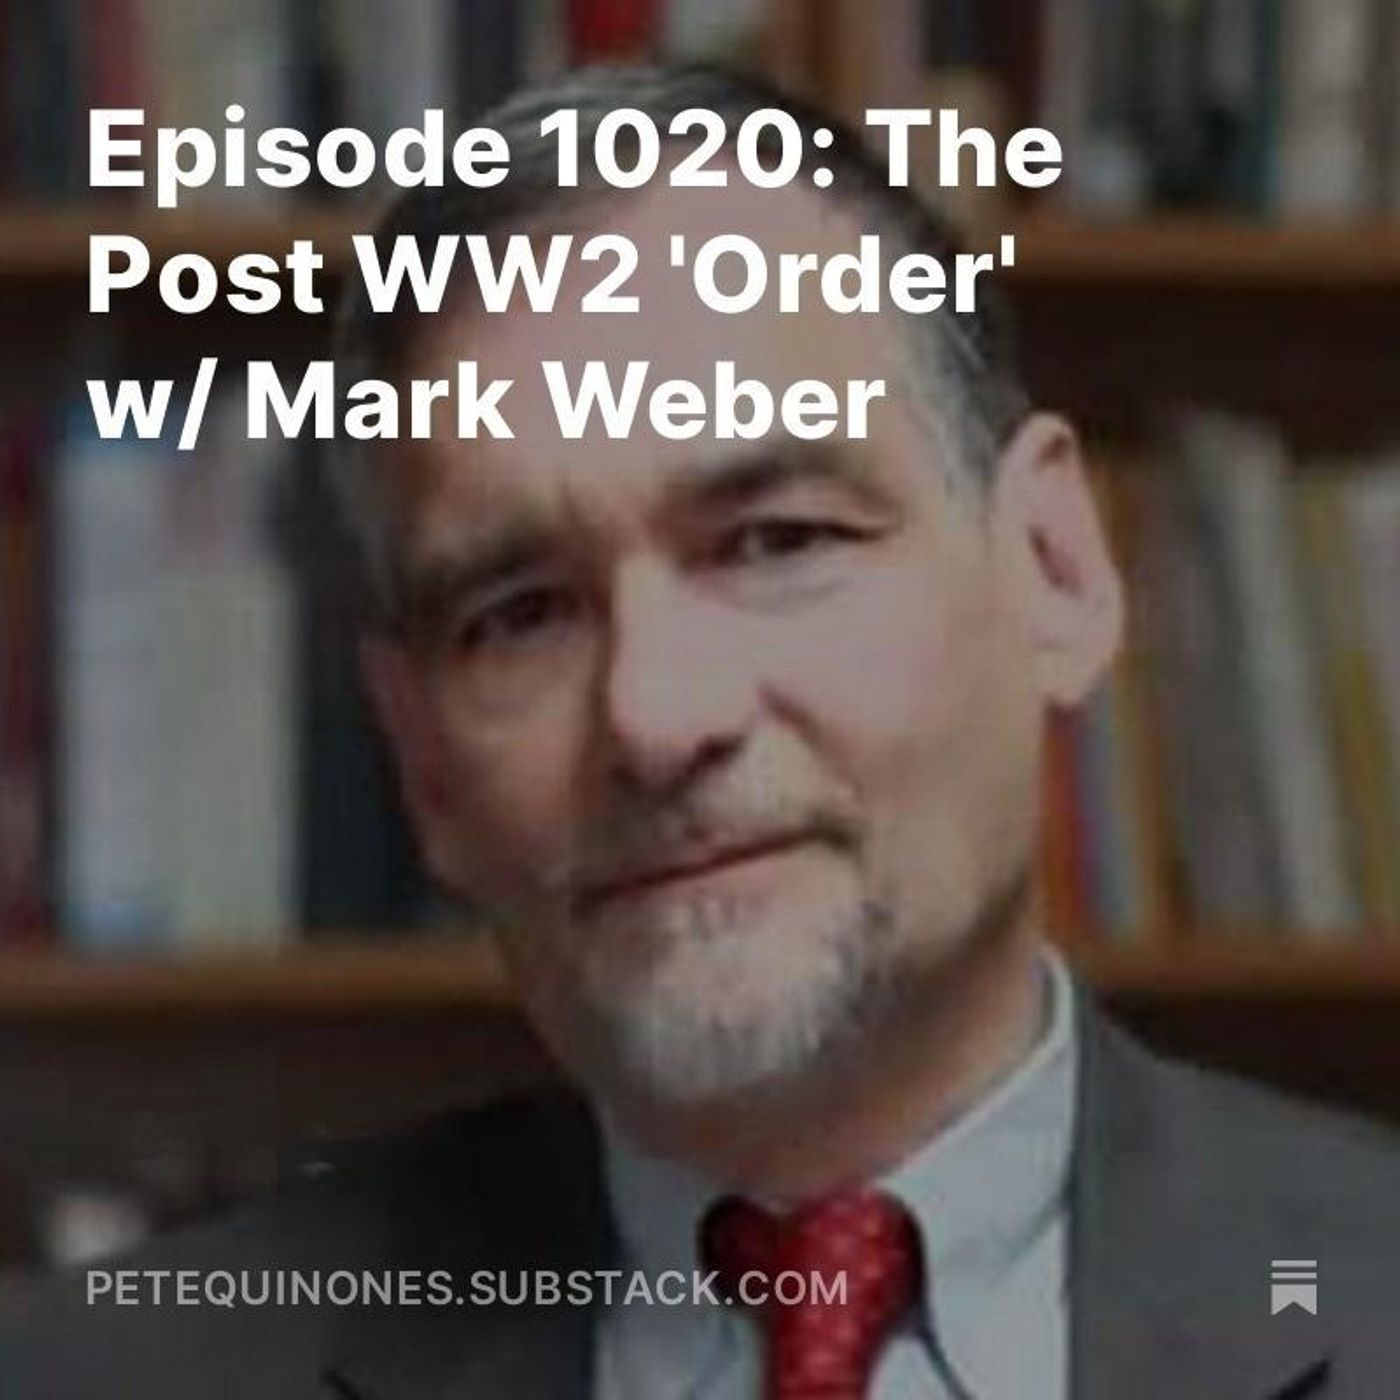 EPISODE 1020: THE POST WW2 'ORDER' W/ MARK WEBER